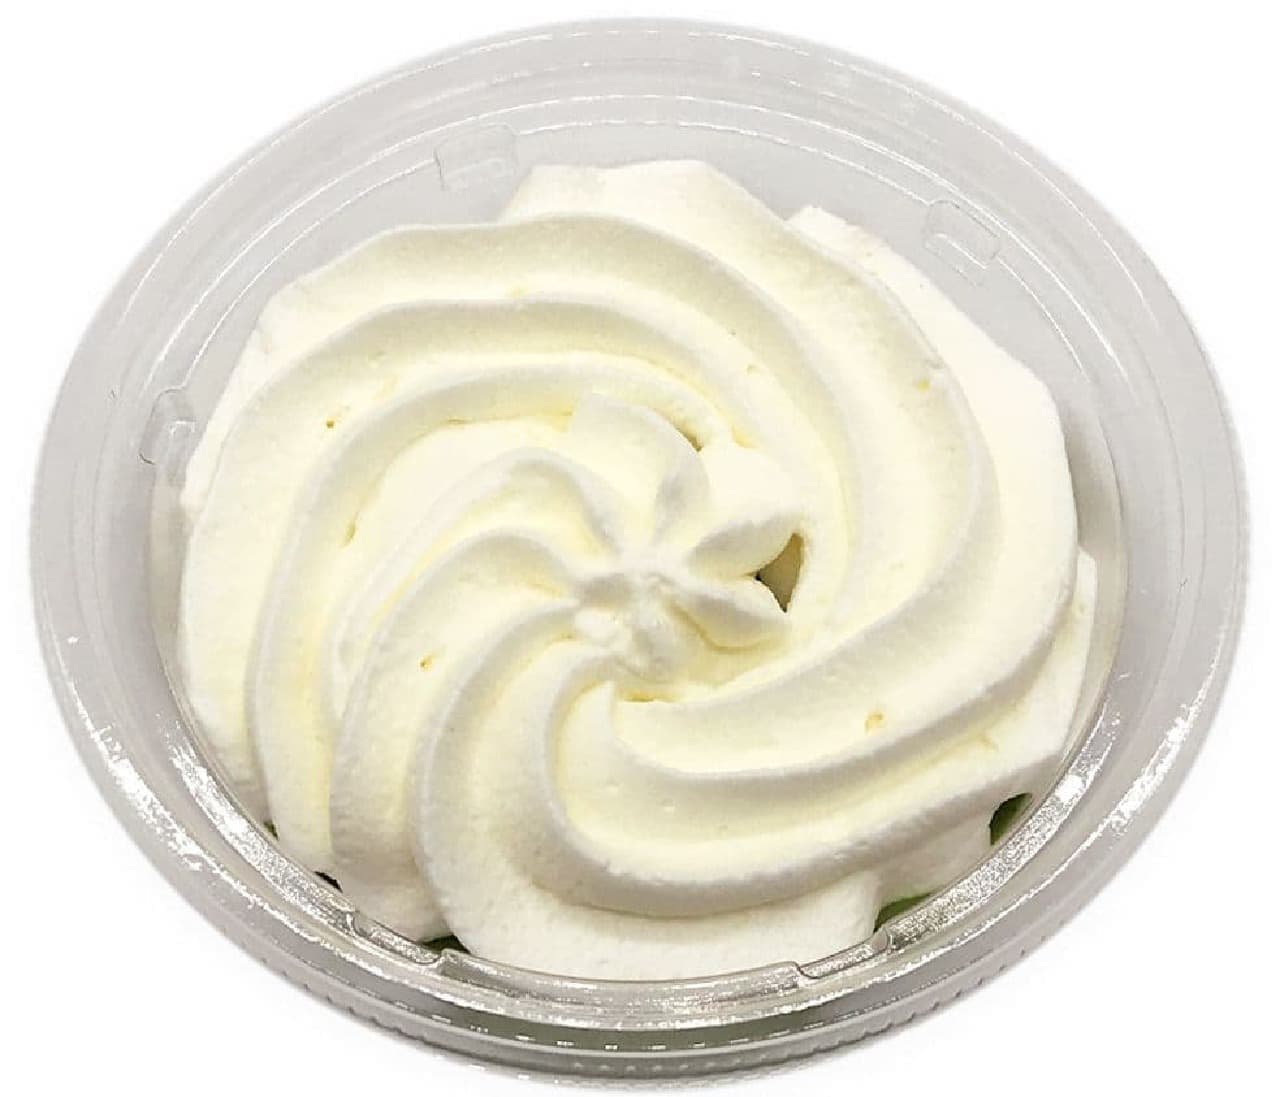 7-ELEVEN "Uji Matcha Bavarian Cream"